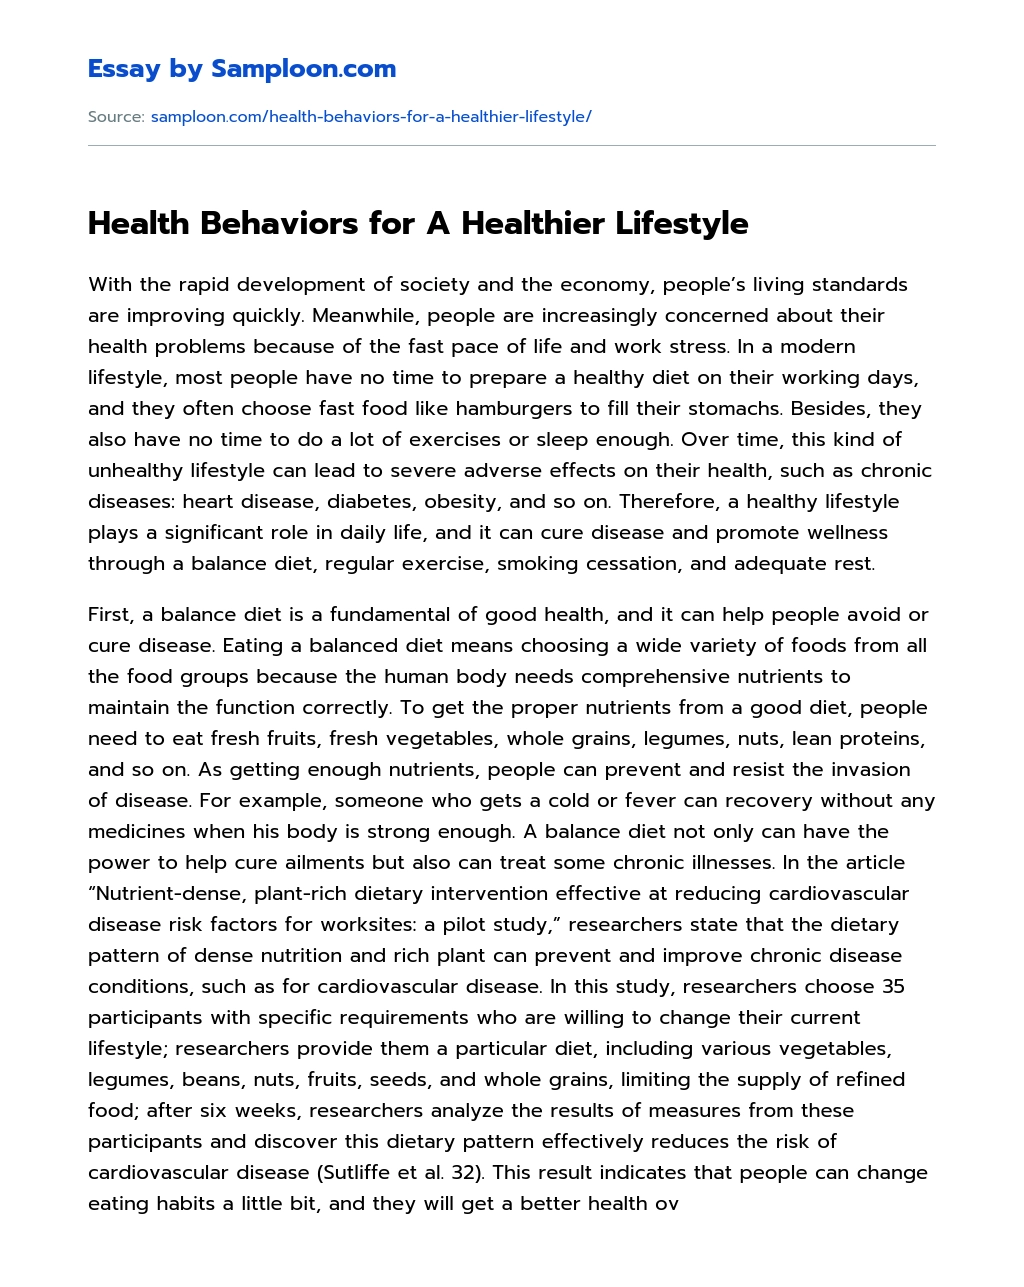 Health Behaviors for A Healthier Lifestyle essay